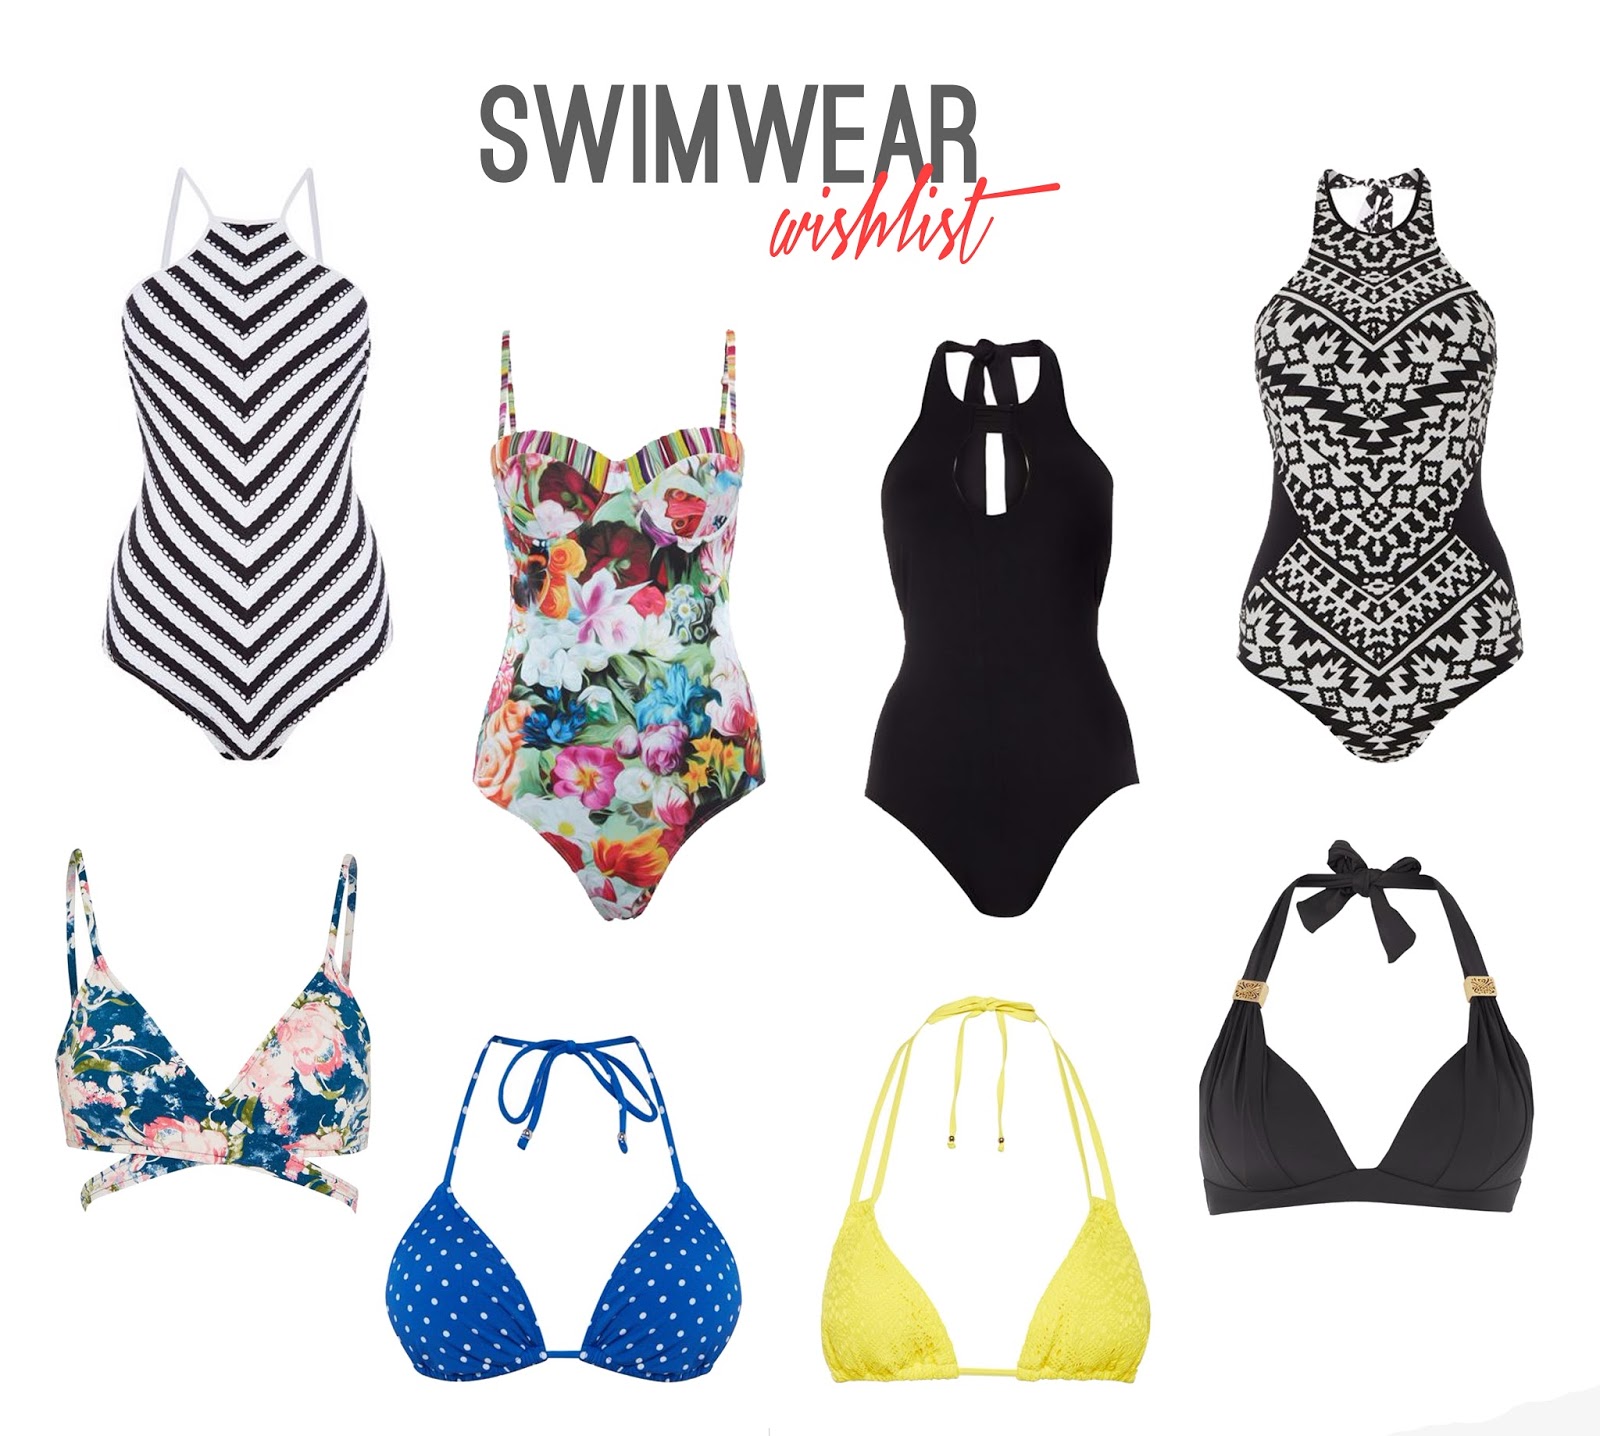 Swimwear Wishlist & Win a £30 House of Fraser Giftcard - Rachel Nicole